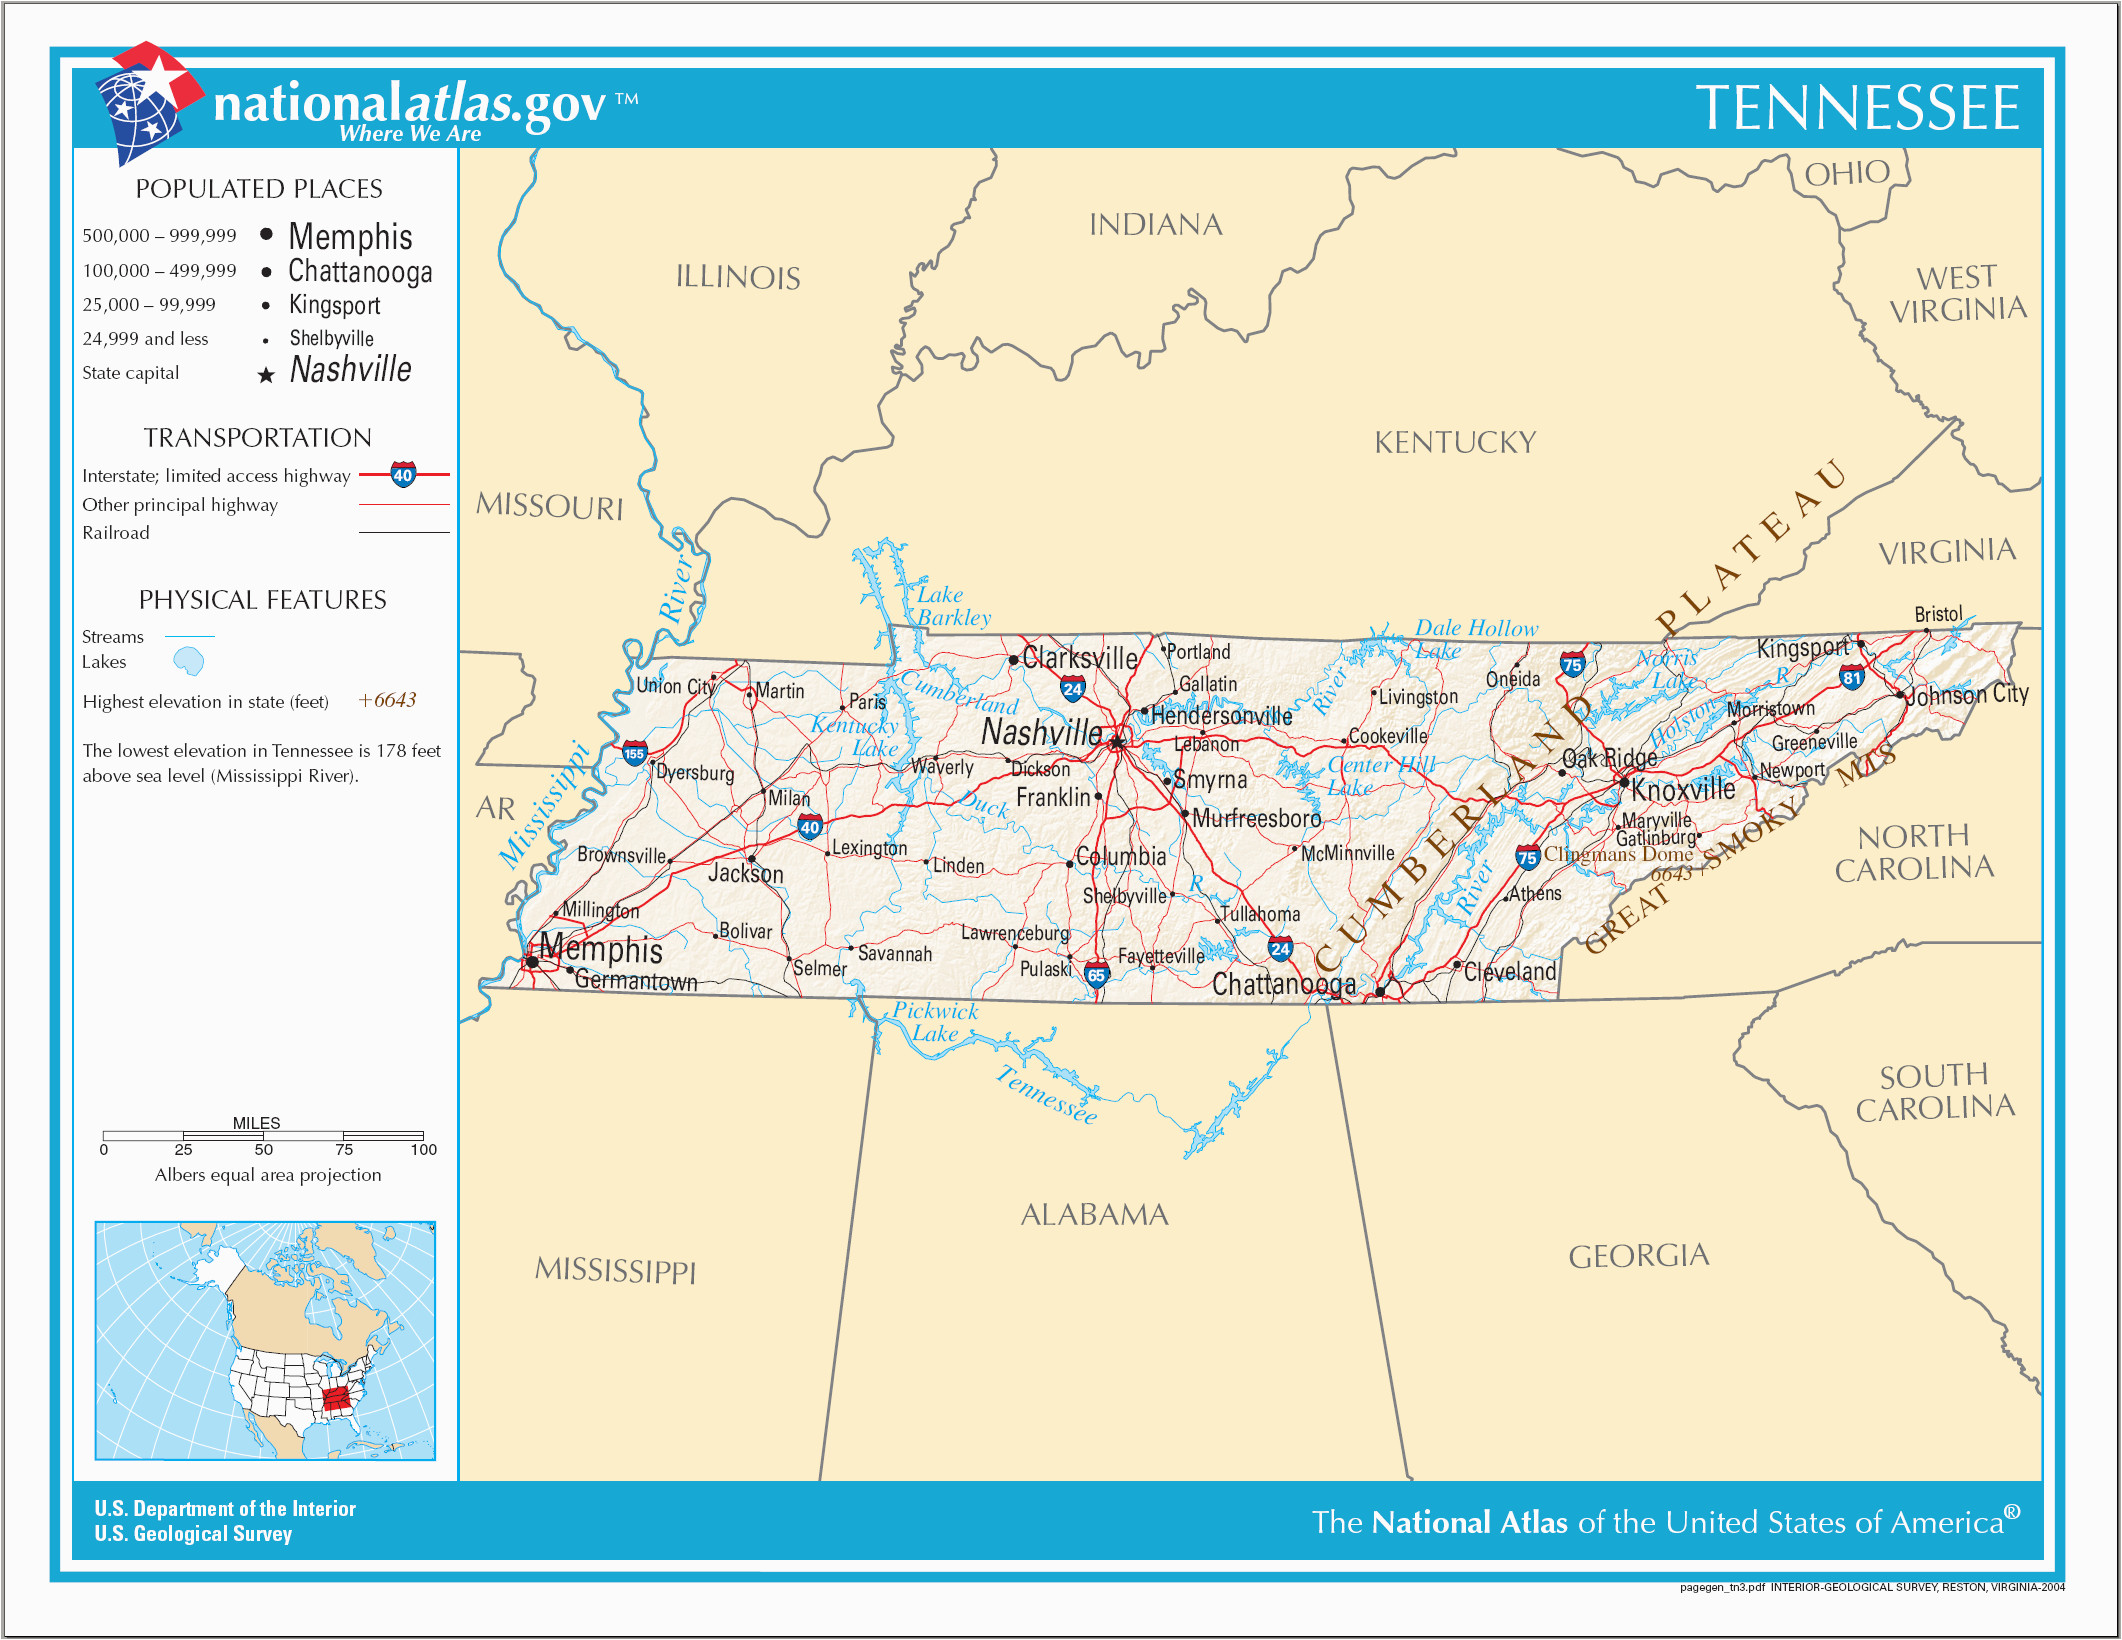 Erwin Tennessee Map Liste Der ortschaften In Tennessee Wikipedia